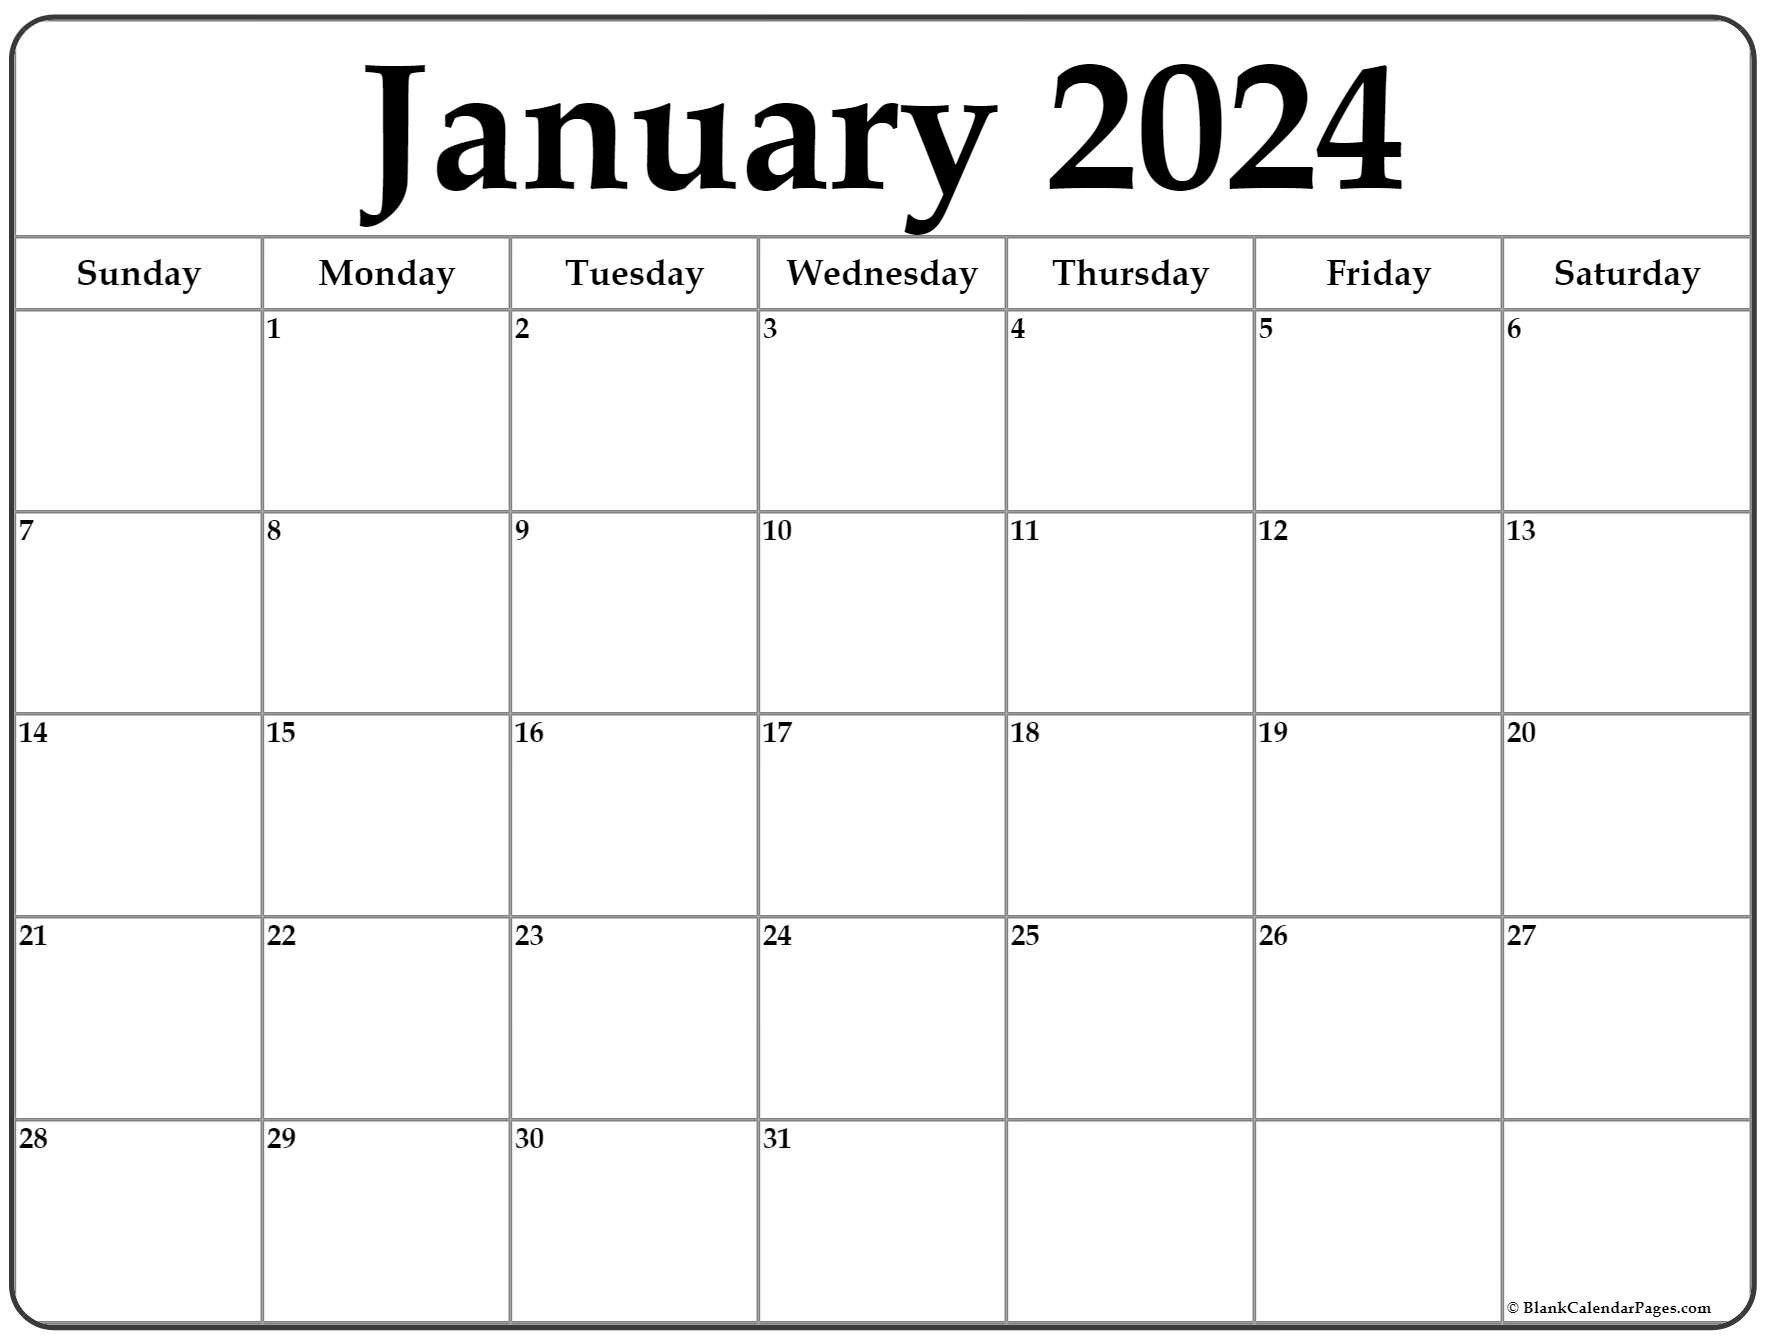 January 2024 Printable Calendar - Free Printable 2024 Calendar January